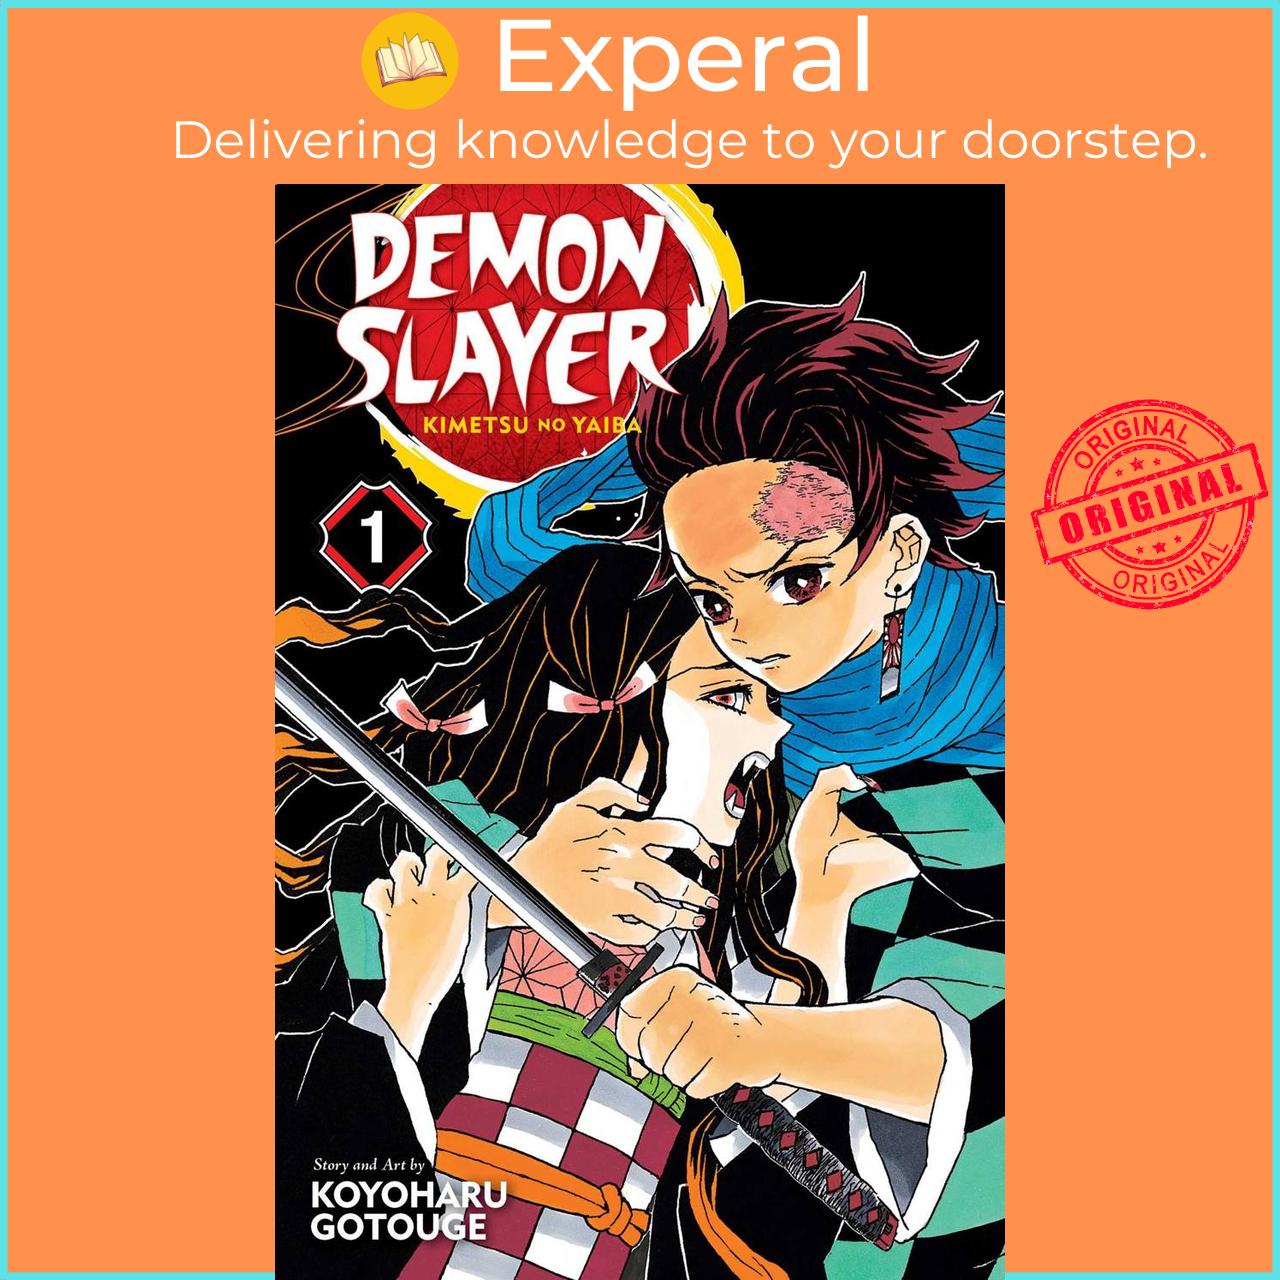 Sách - Demon Slayer: Kimetsu no Yaiba, Vol. 1 by Koyoharu Gotouge (UK edition, paperback)